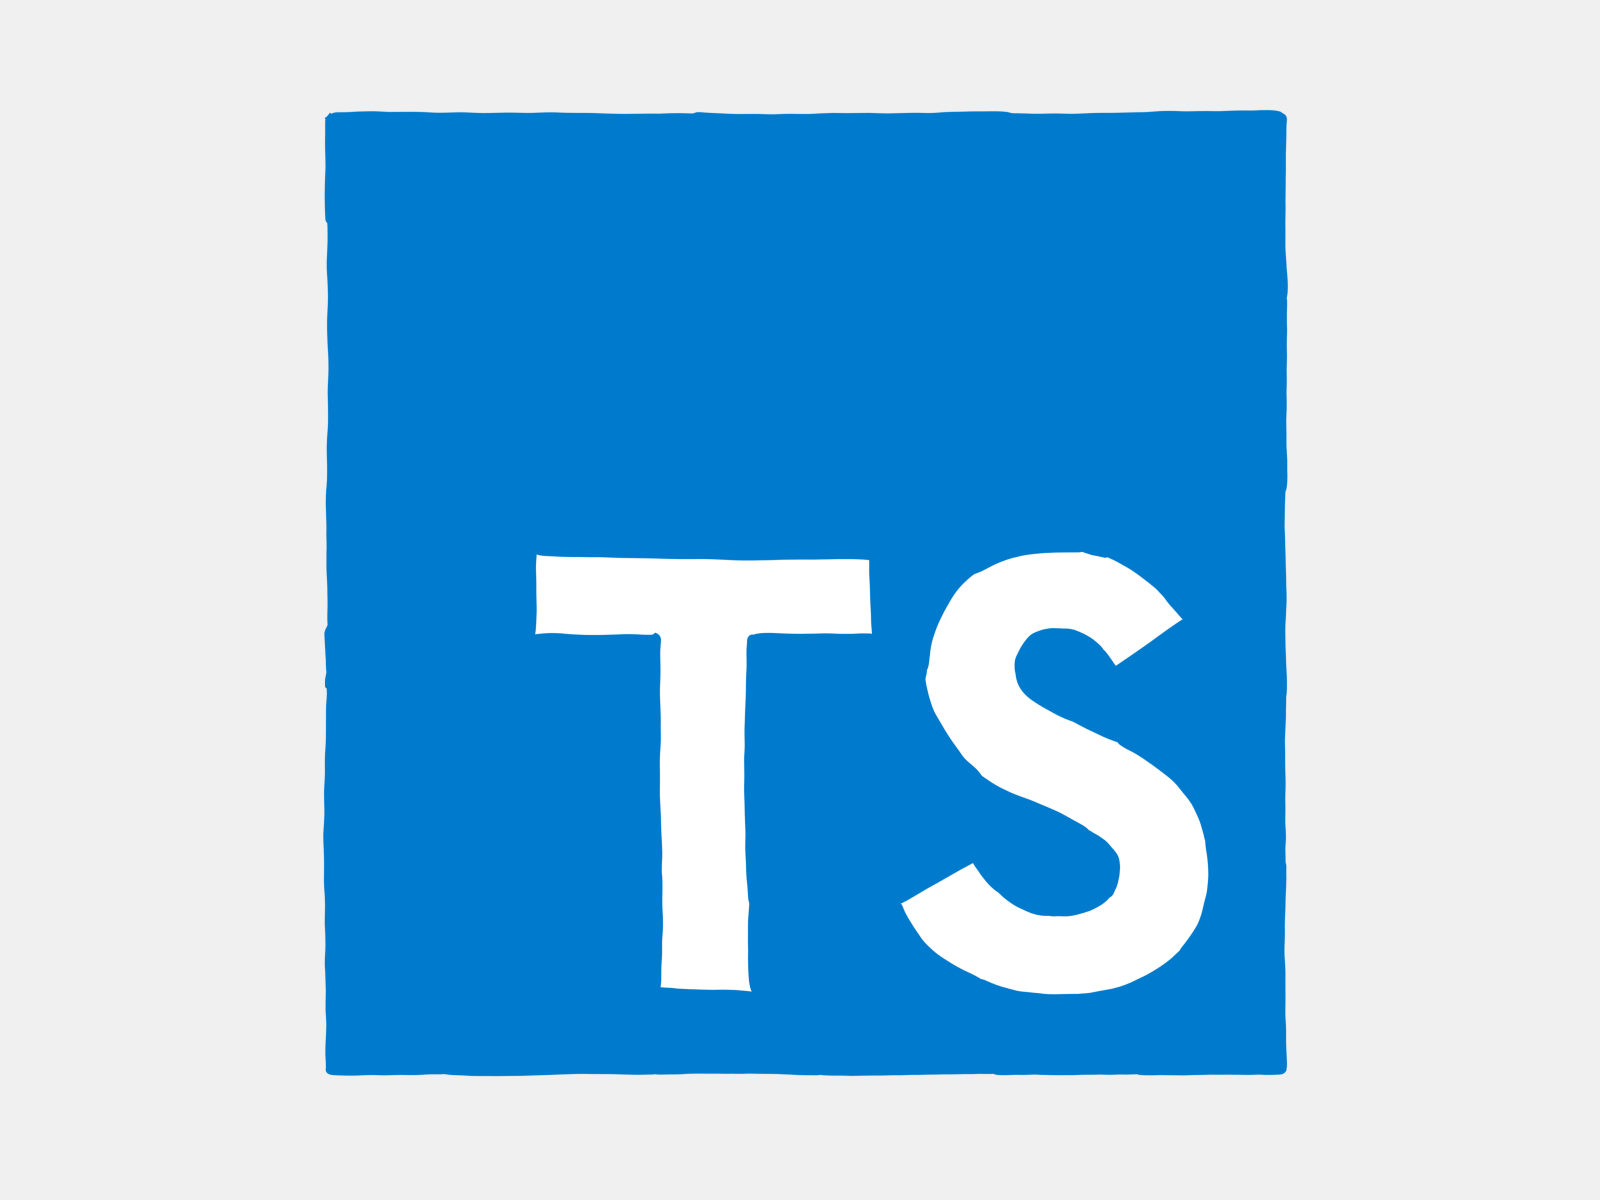 An illustration of the TypeScript logo.